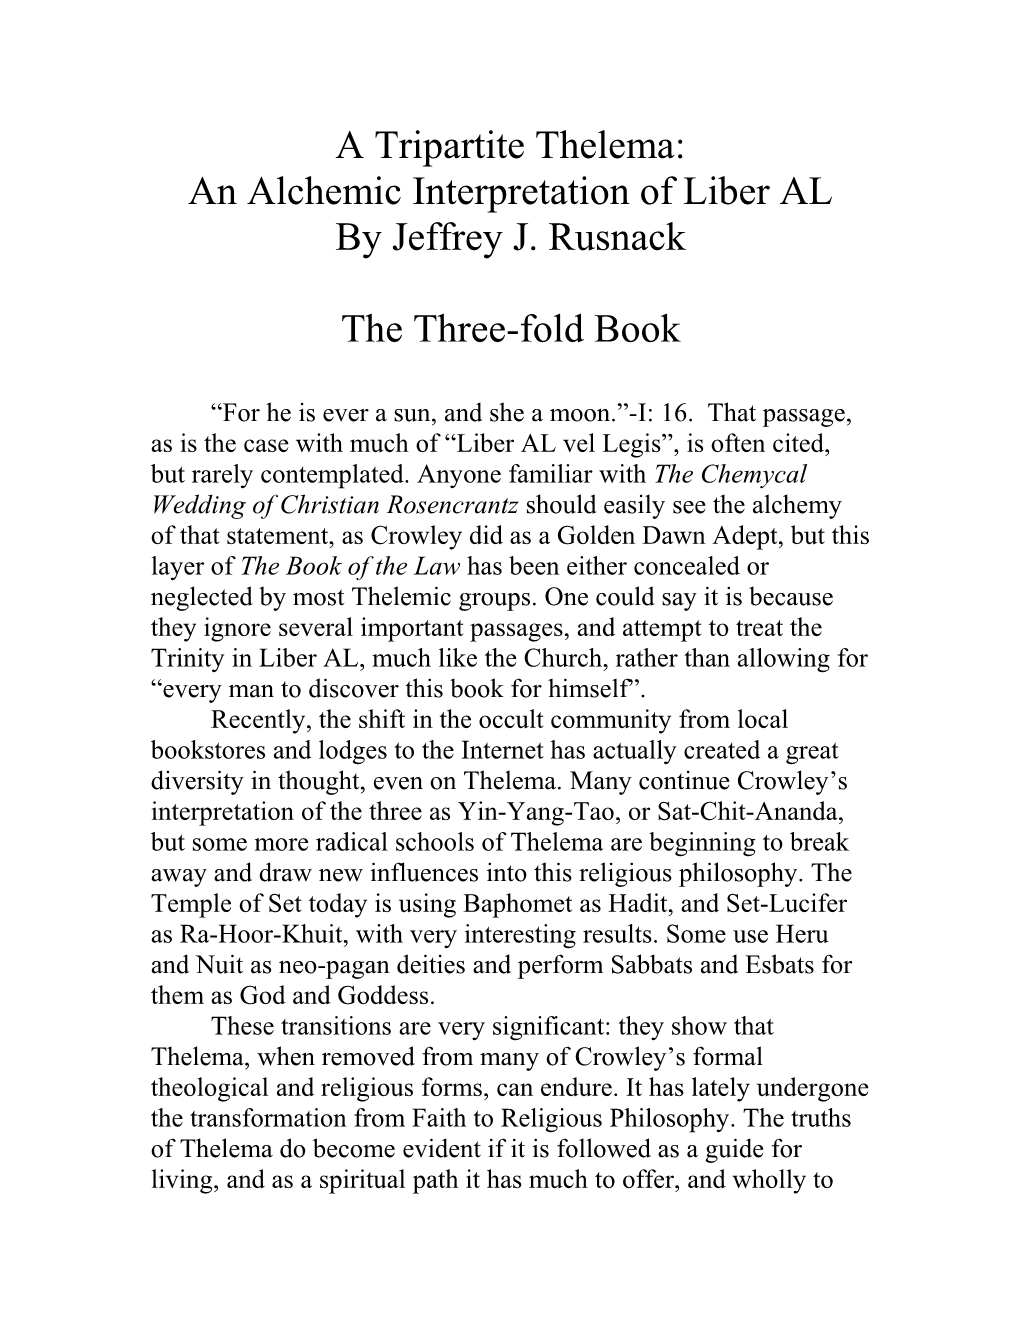 An Alchemic Interpretation of Liber AL